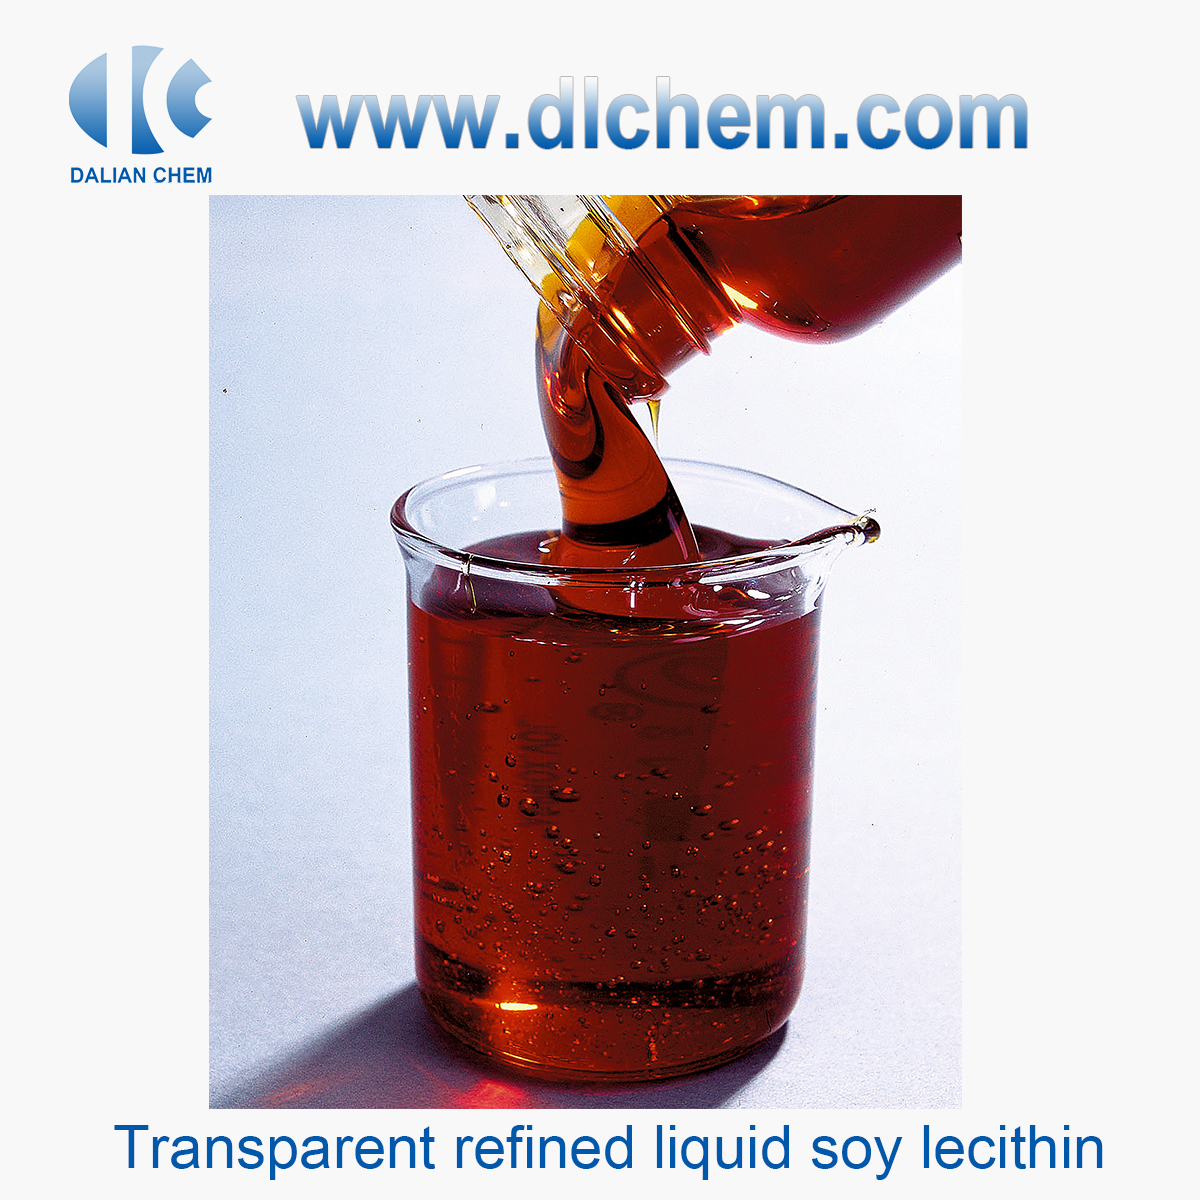 Transparent refined liquid soy lecithin